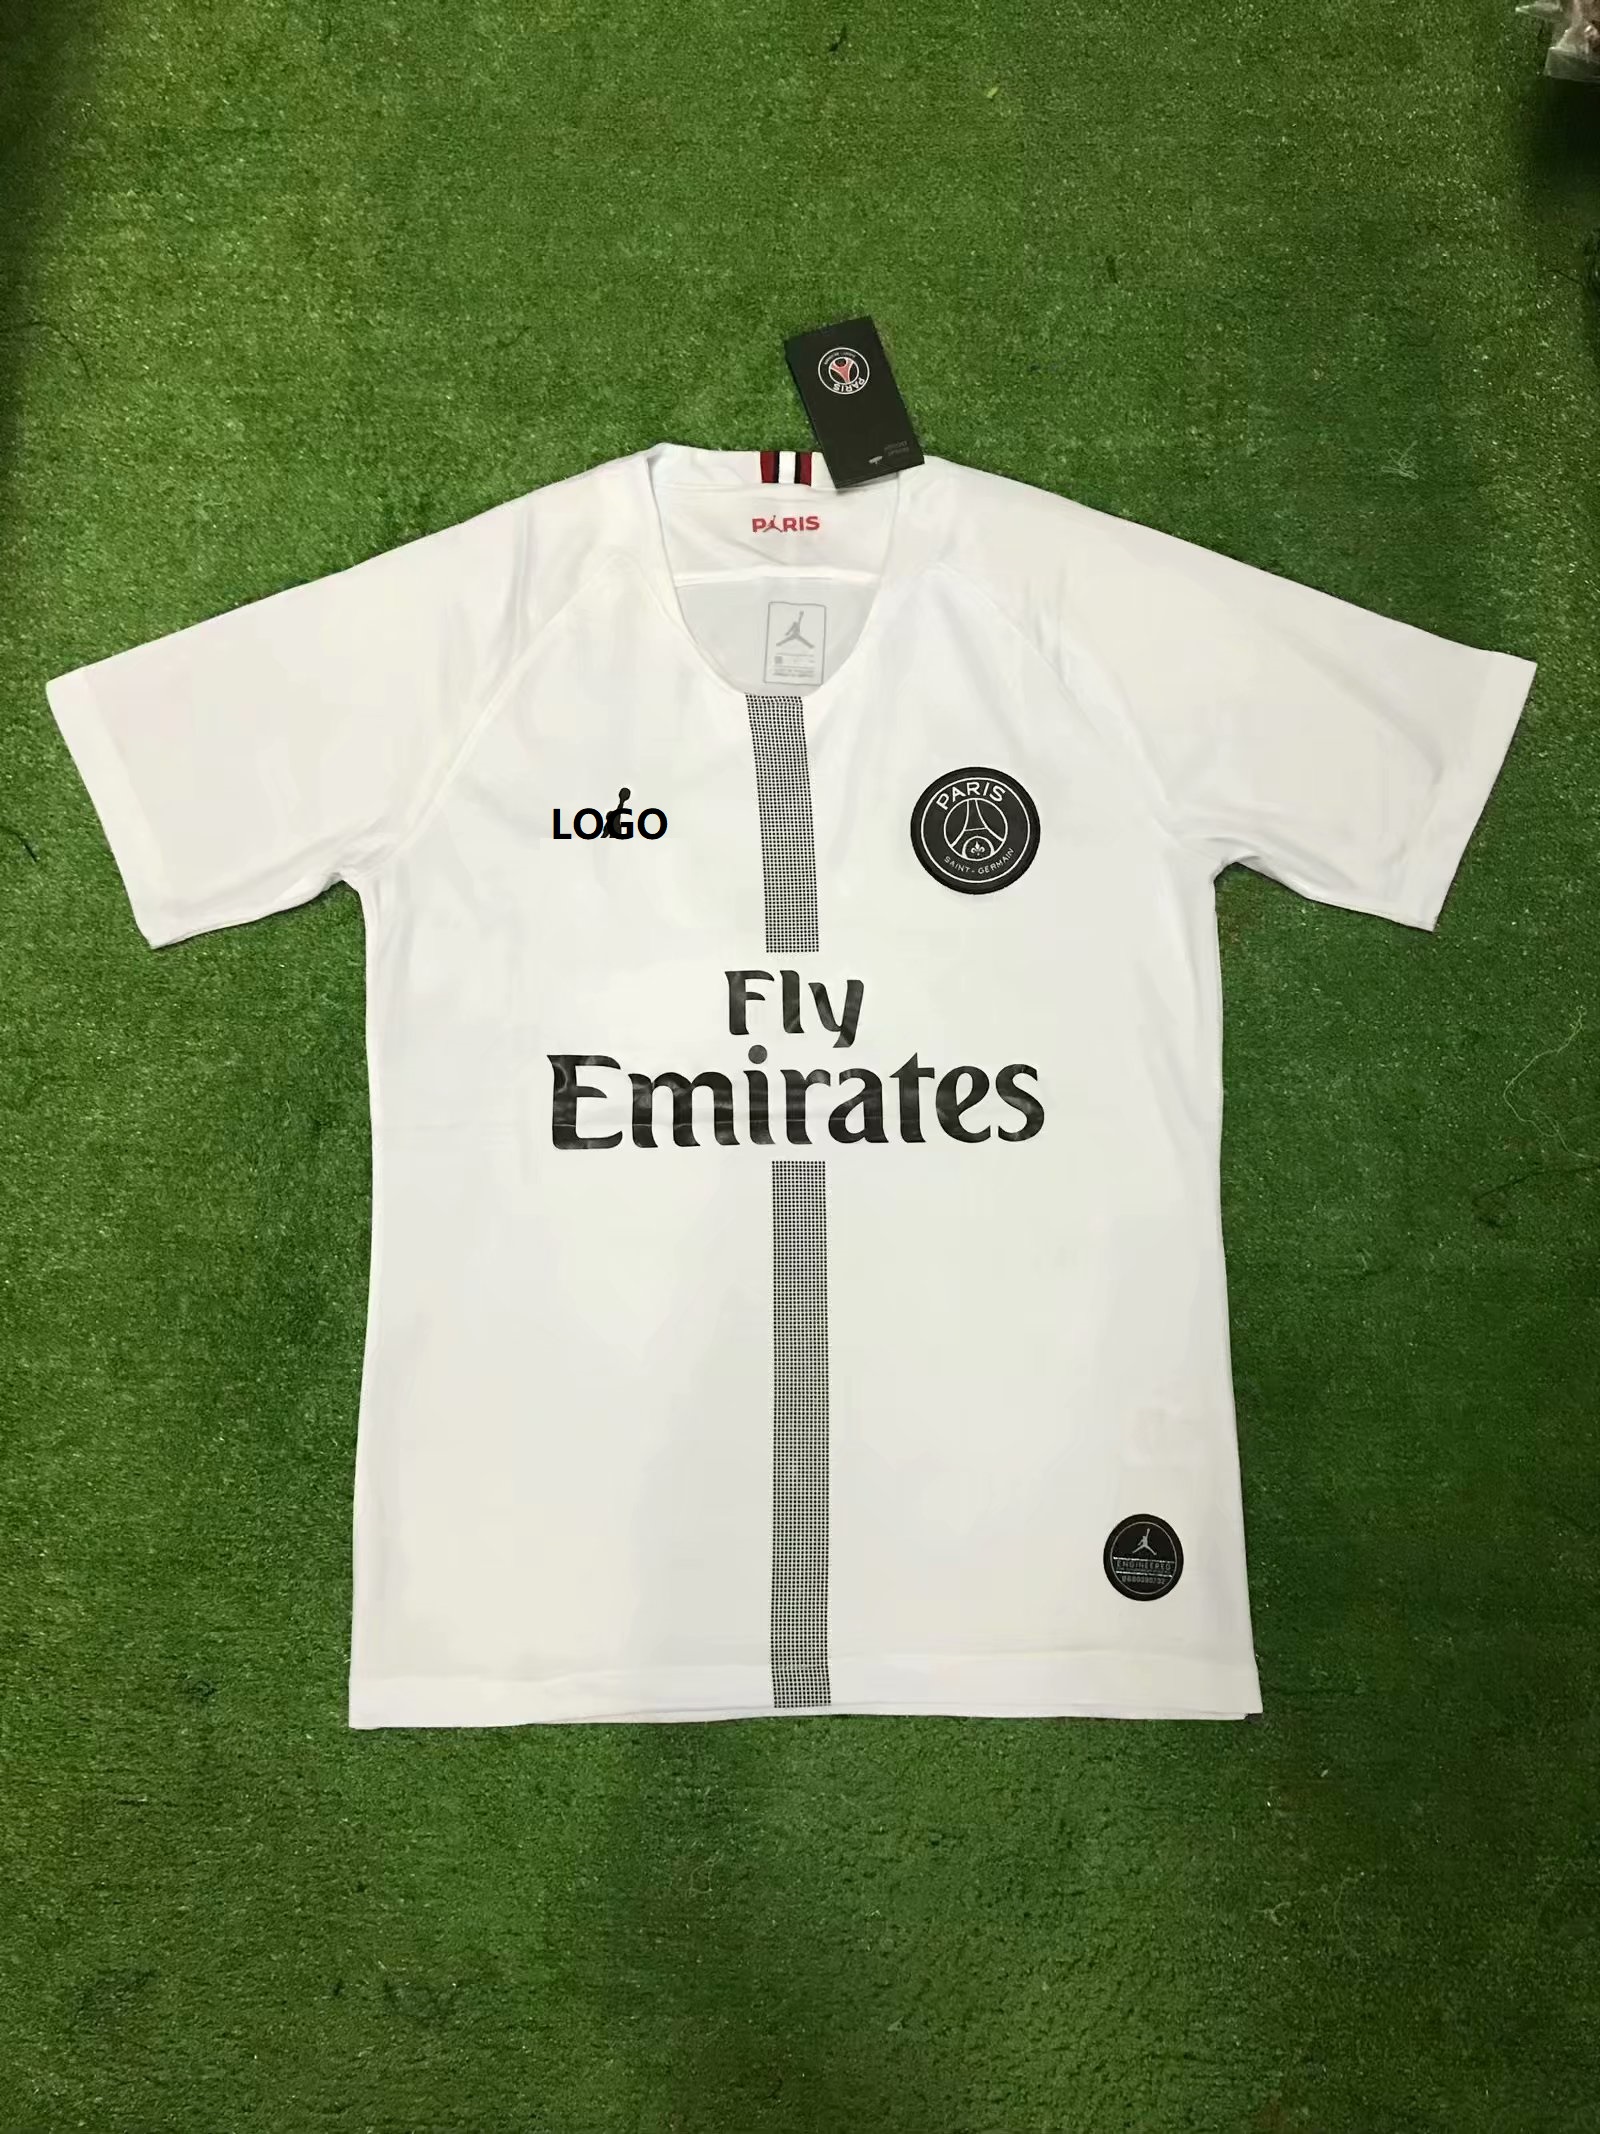 2018/19 UEFA Champions League PSG Paris Soccer Jersey Football Shirt